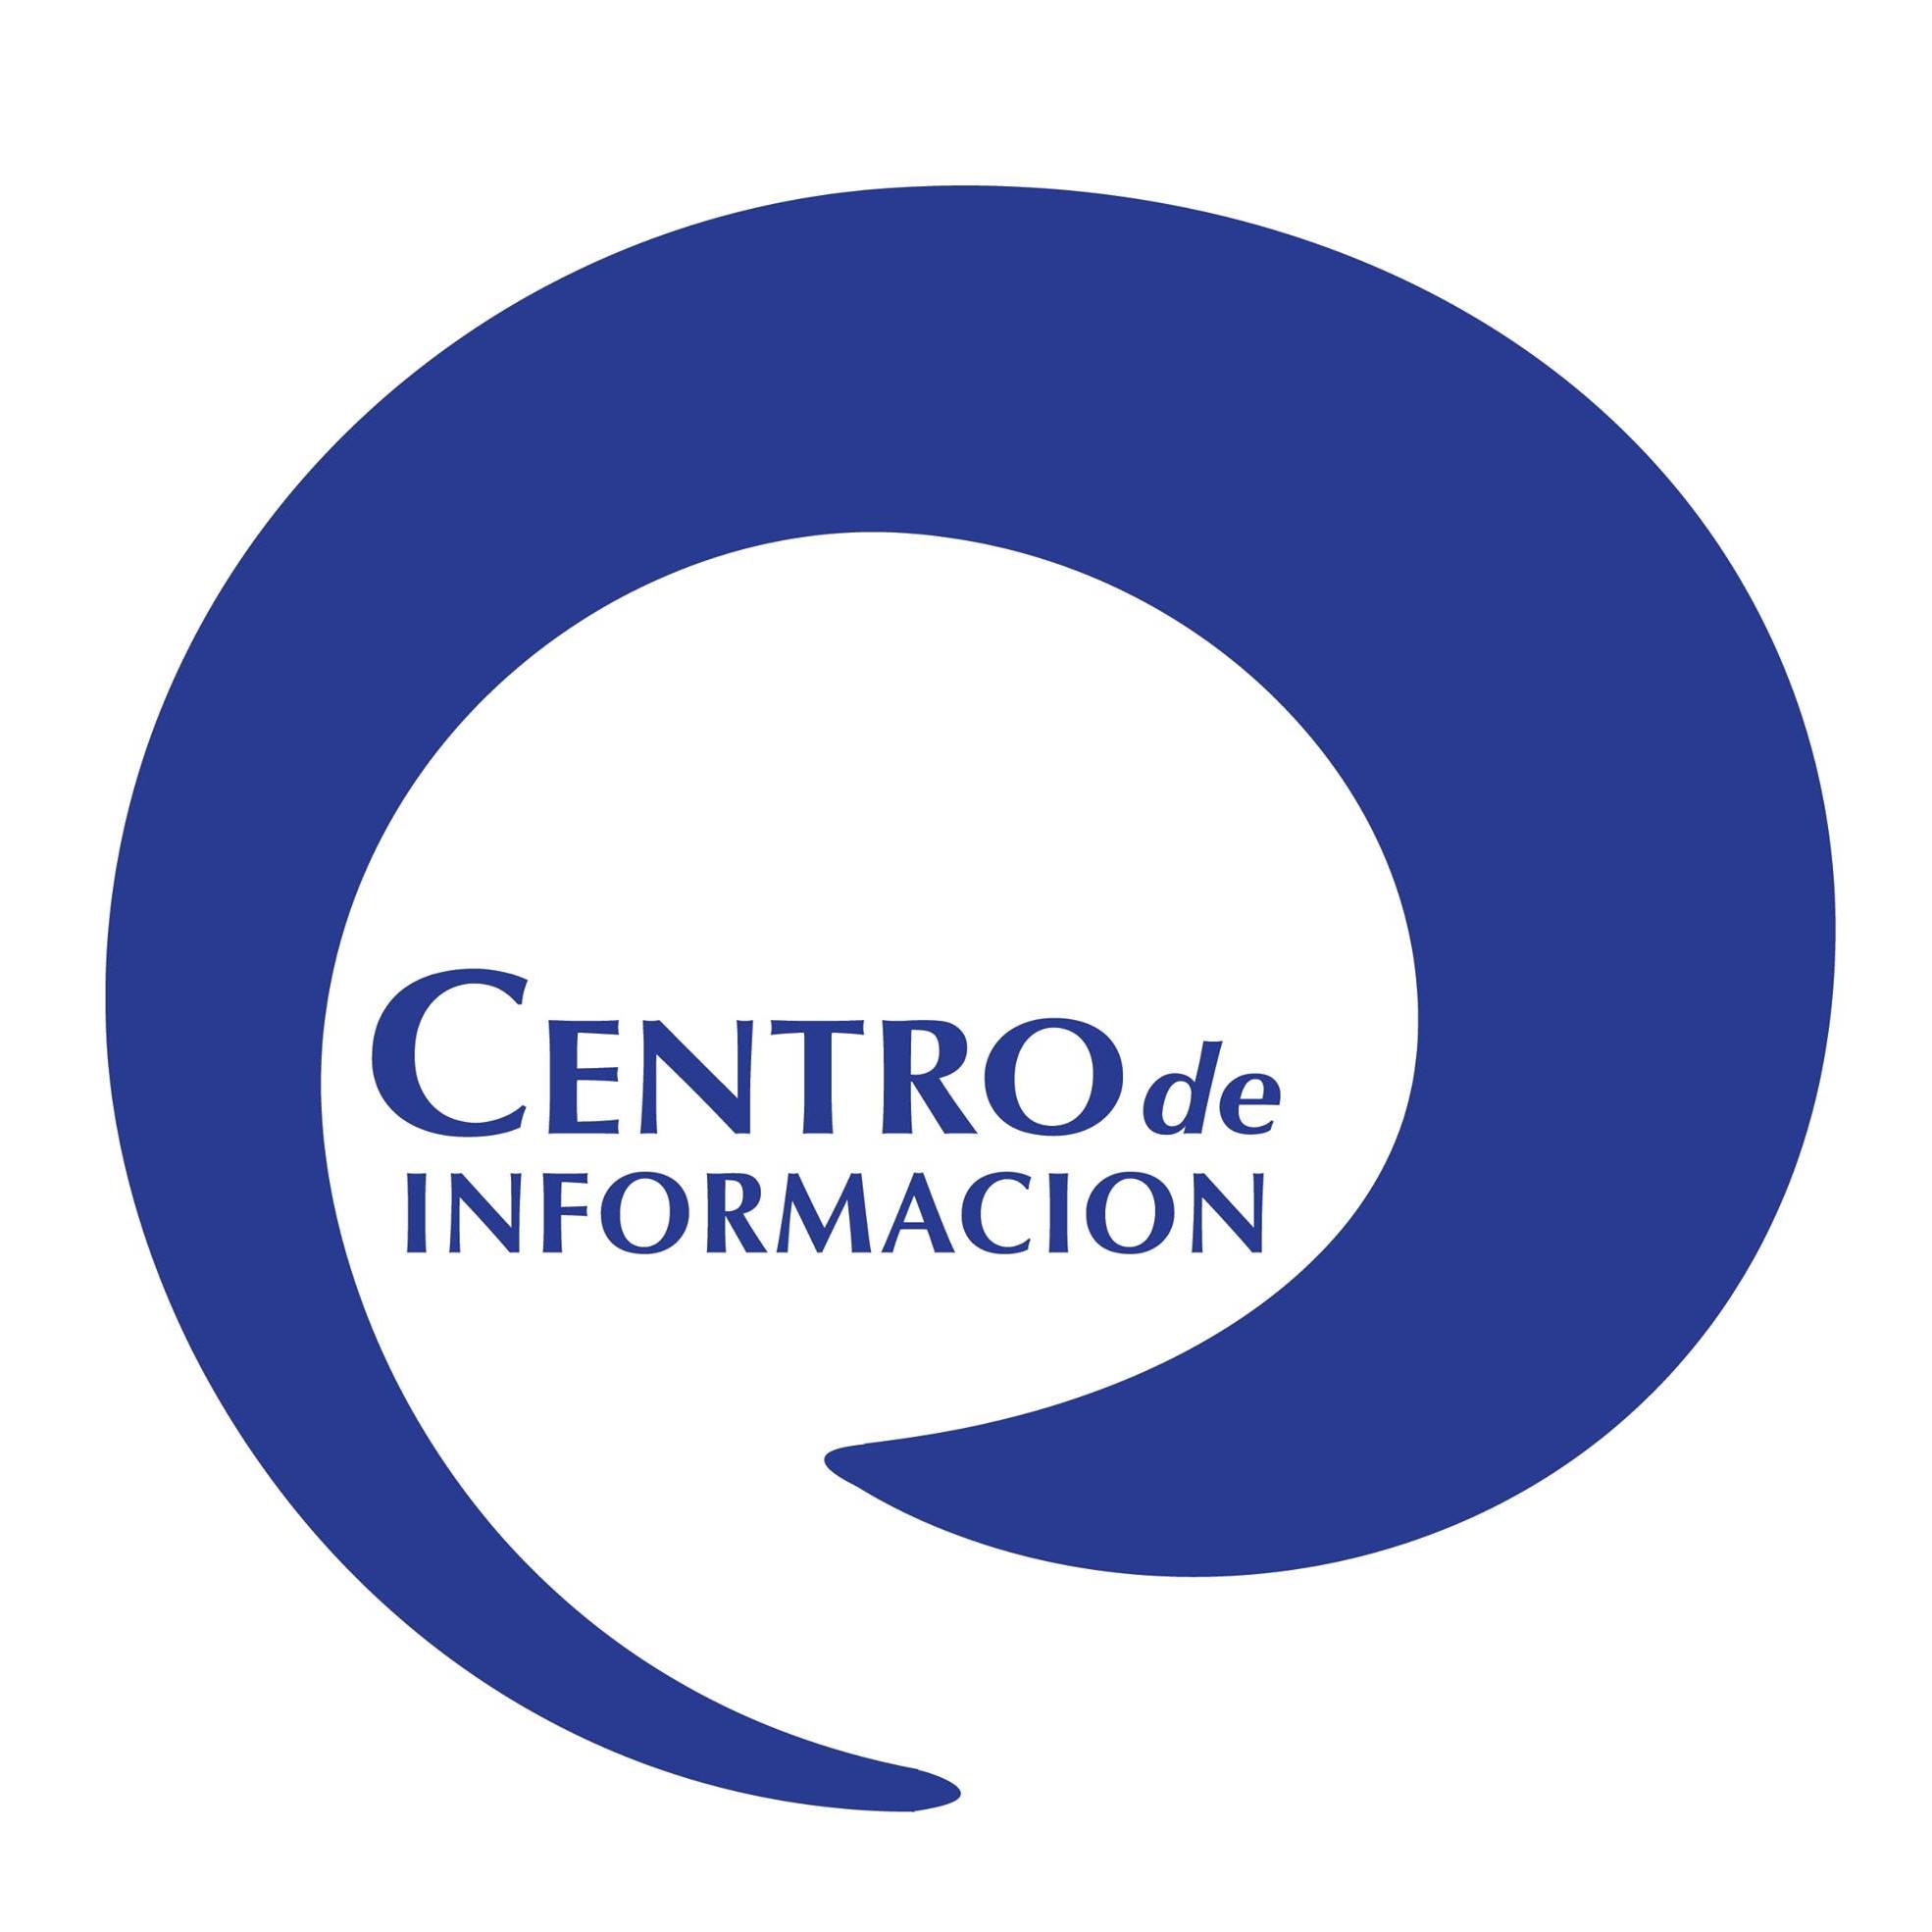 Information Logo - Centro de Information Logo